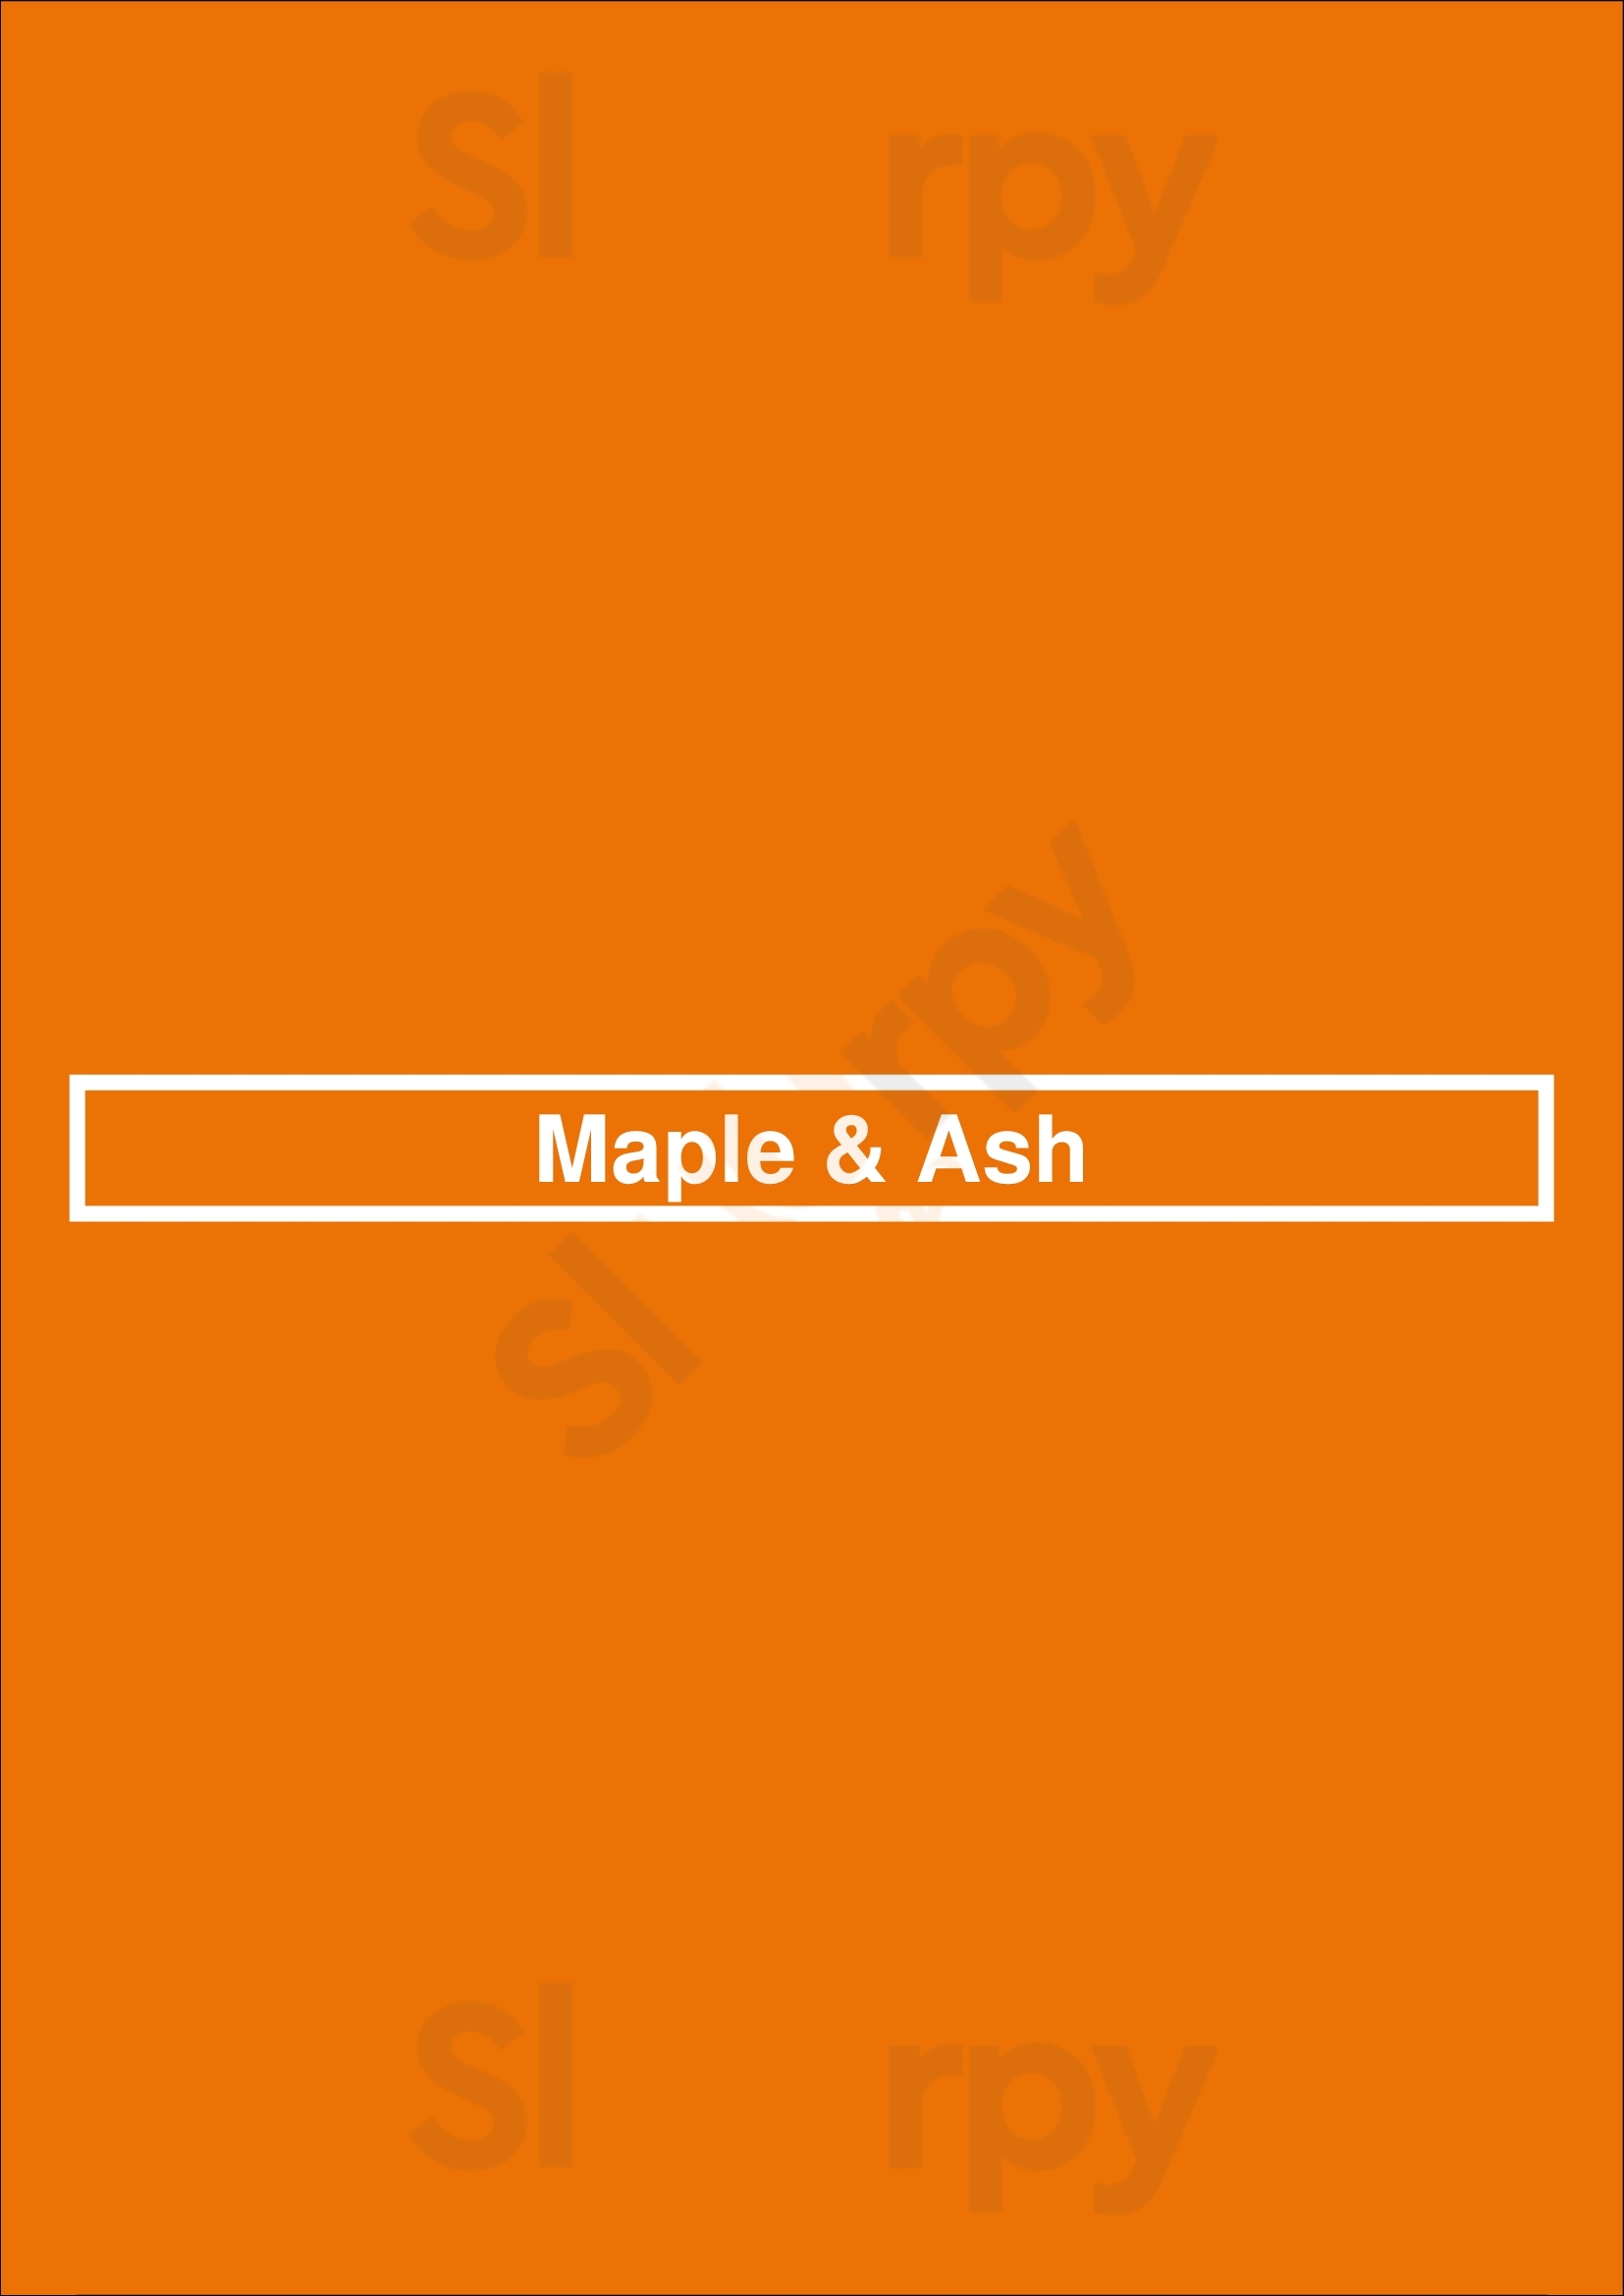 Maple & Ash Chicago Menu - 1